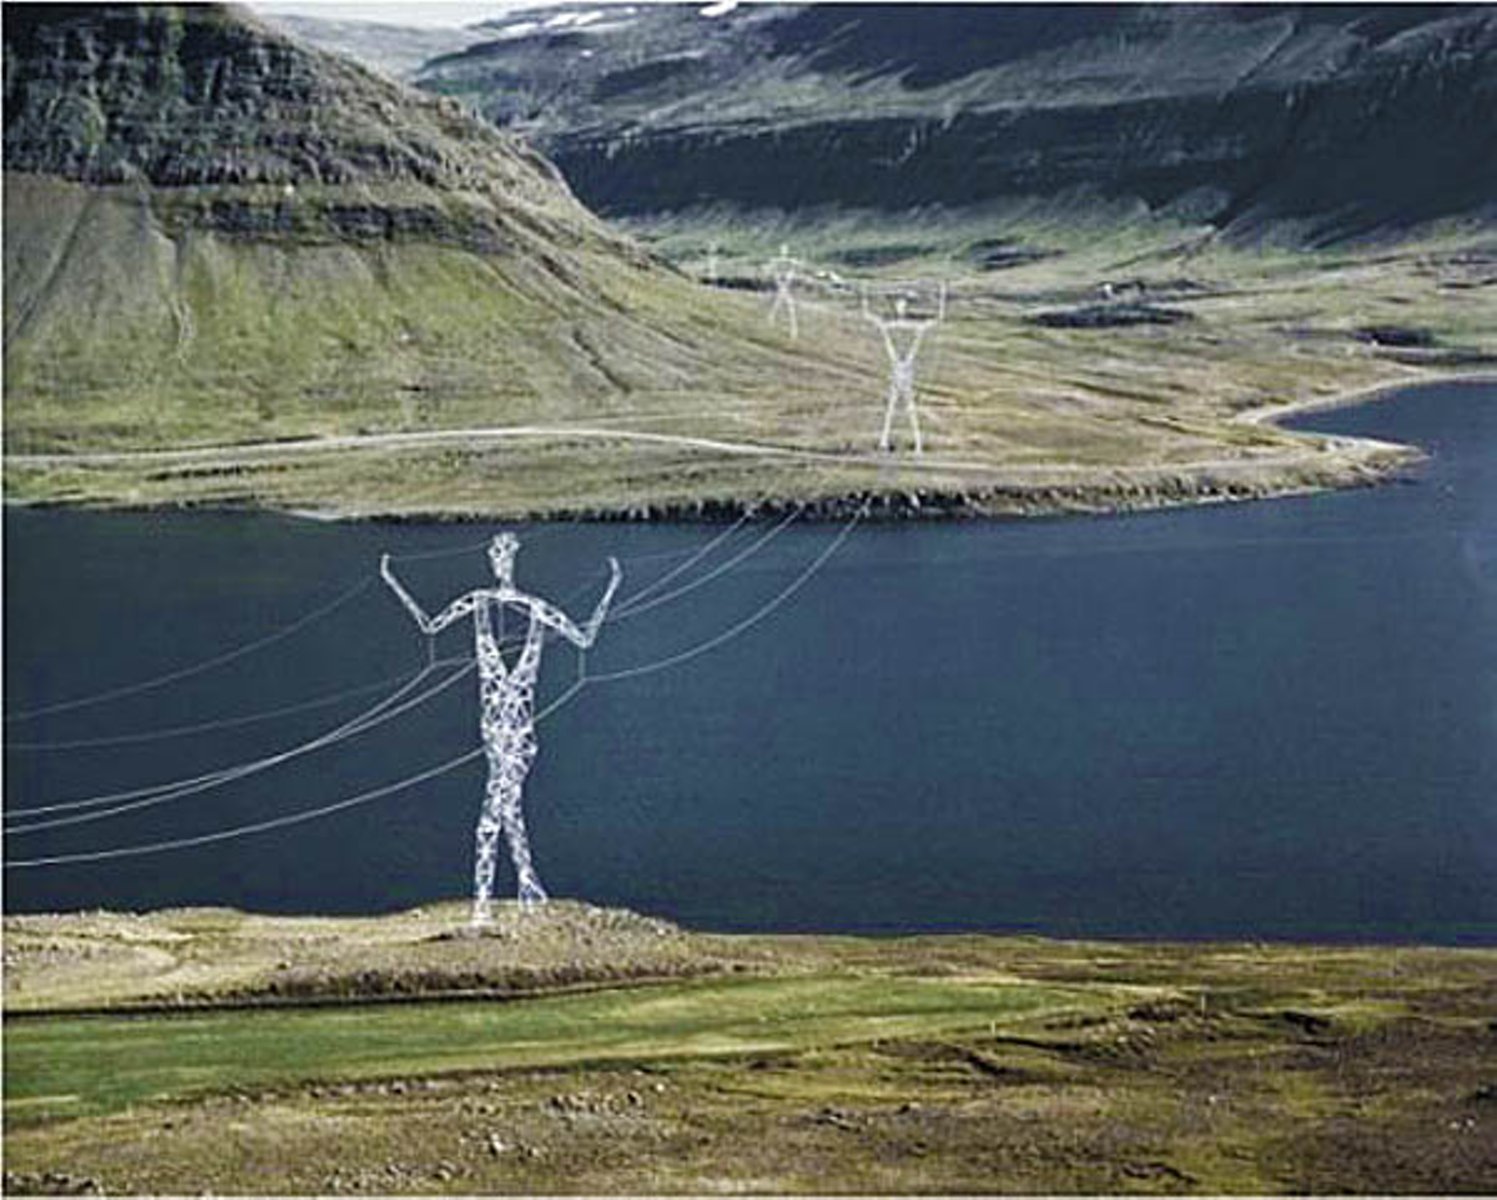 human-pylon-human-shape-electricity-transmission-tower-2-600w.jpg